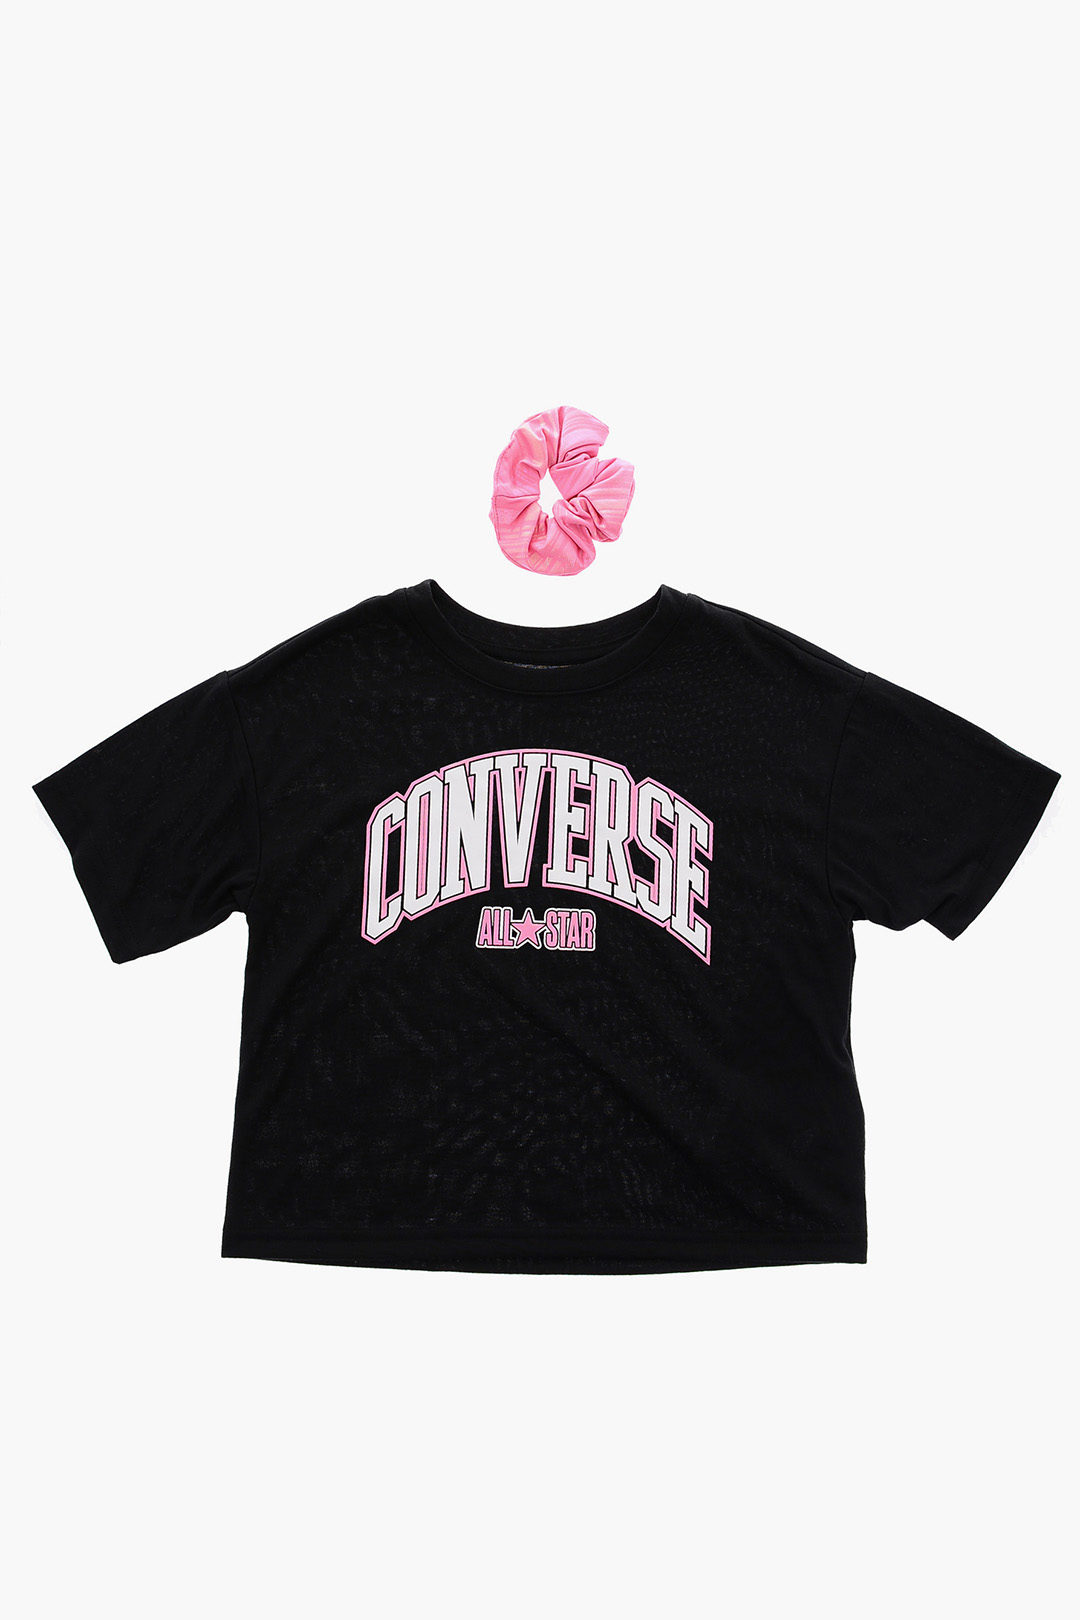 vendedor Juventud Instalación Converse KIDS ALL STAR CHUCK TAYLOR Scrunchie And Crop T-shirt Set girls -  Glamood Outlet